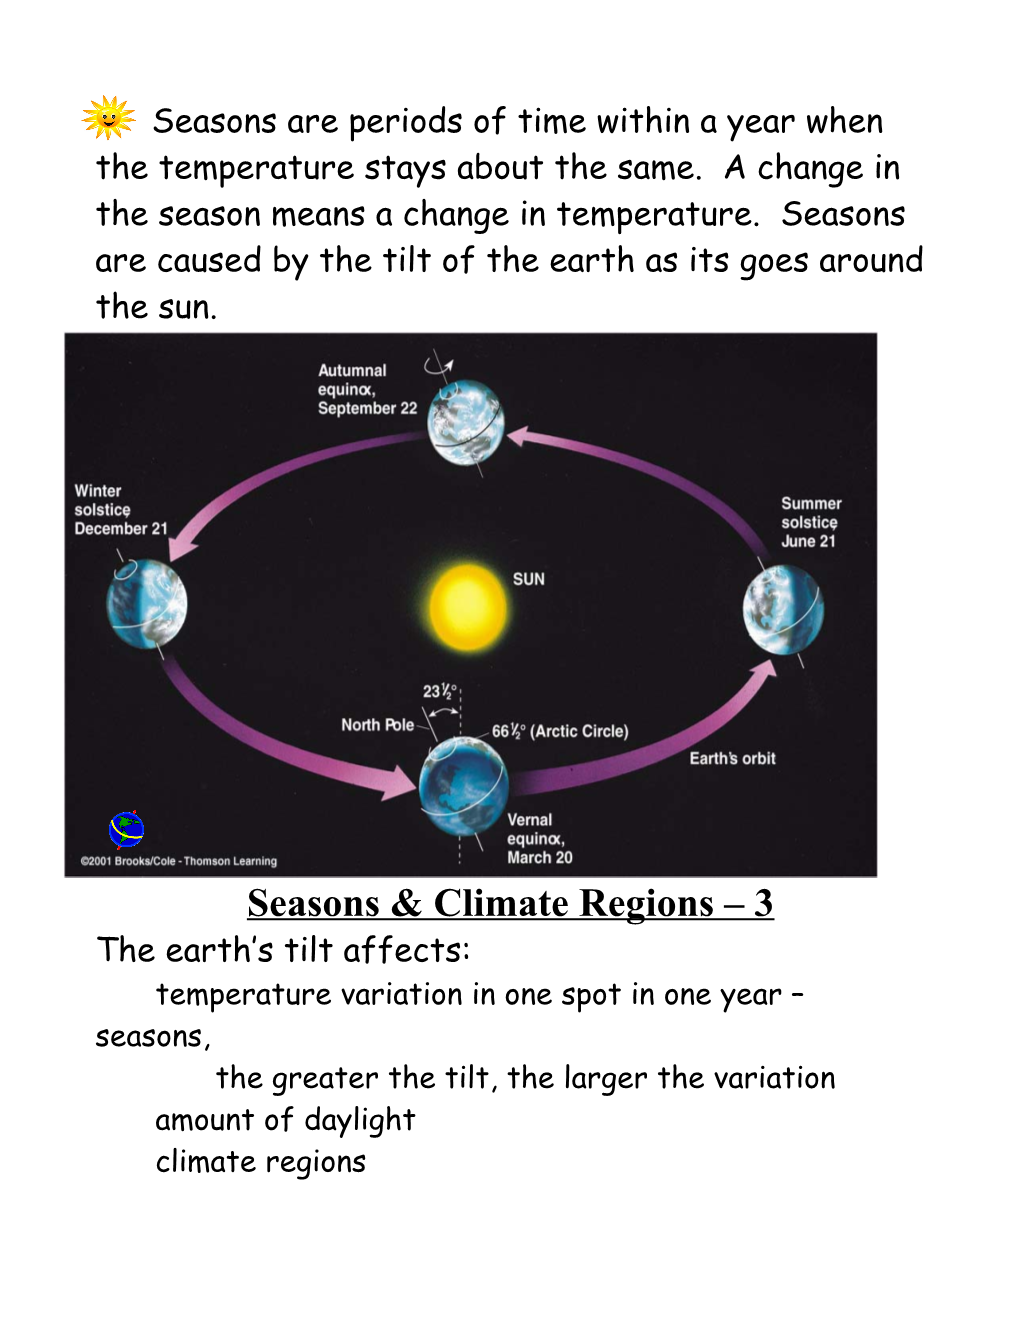 Seasons & Climate Regions